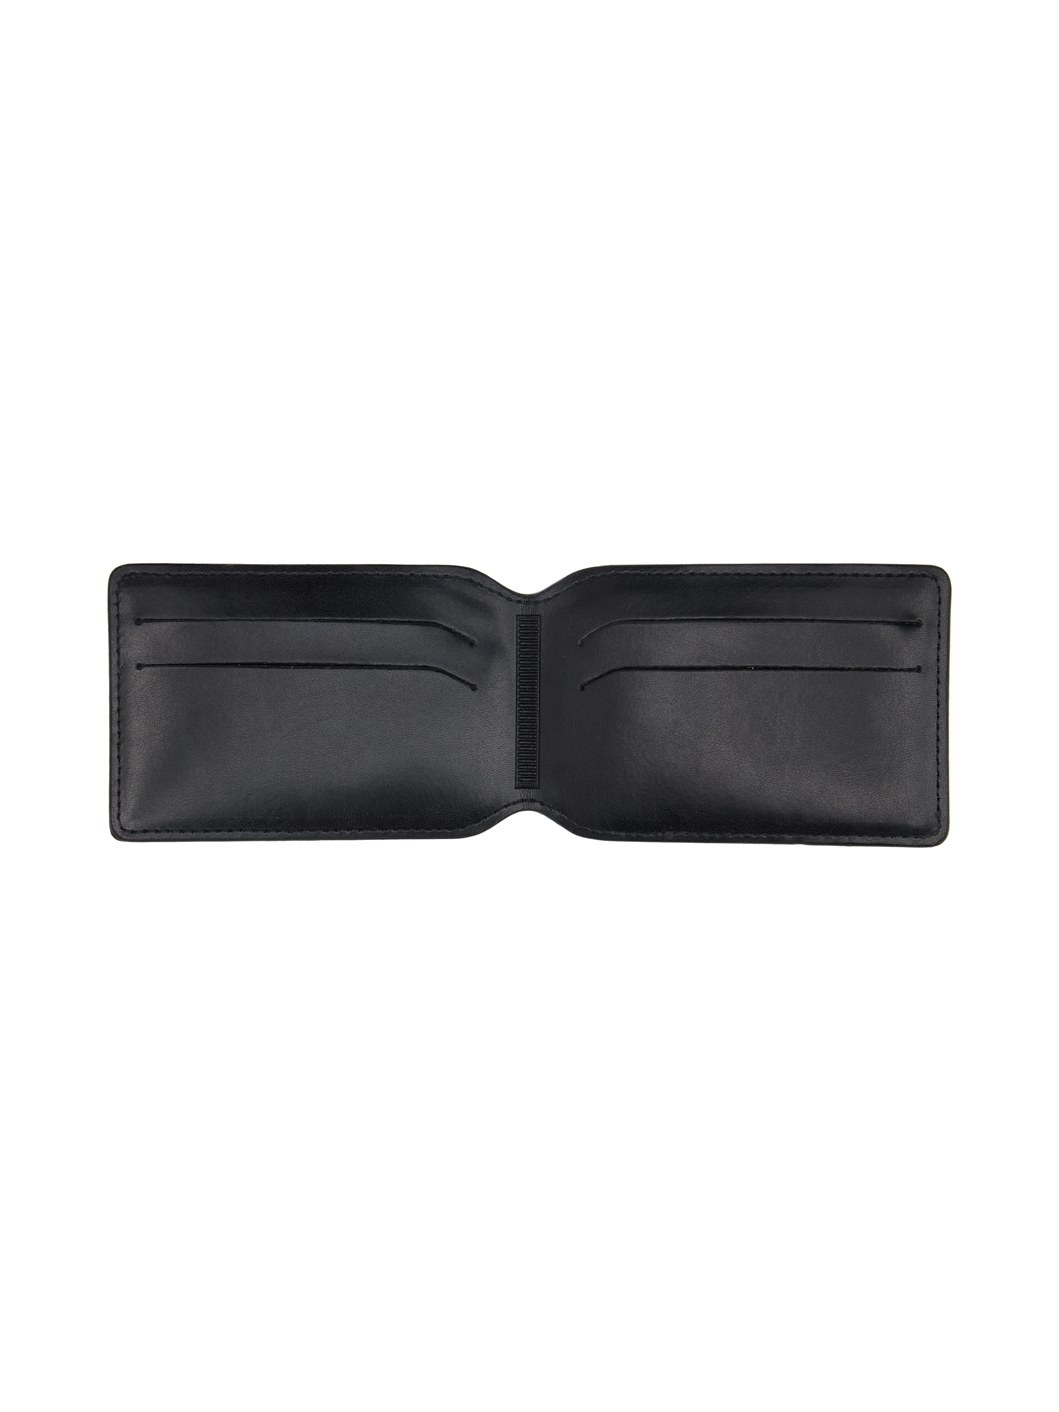 Black Foldable Wallet - 3